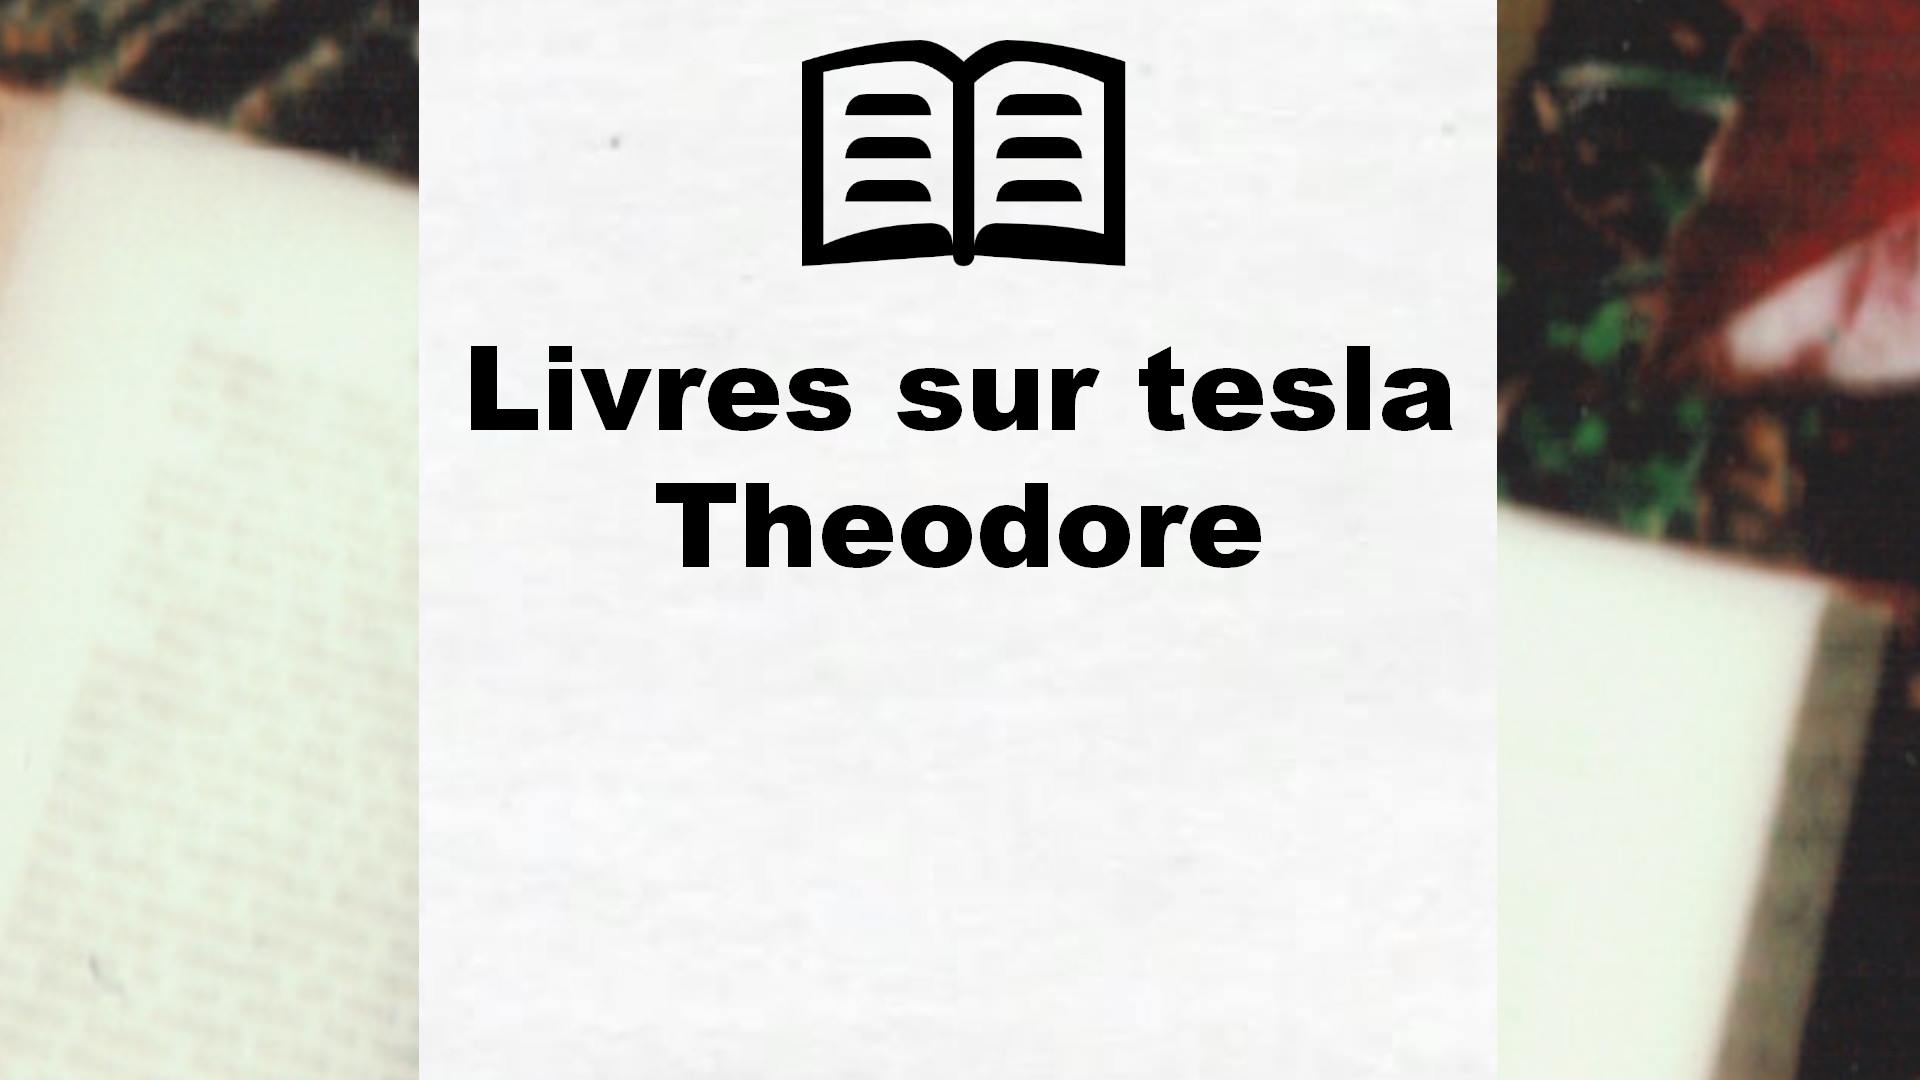 Livres sur tesla Theodore